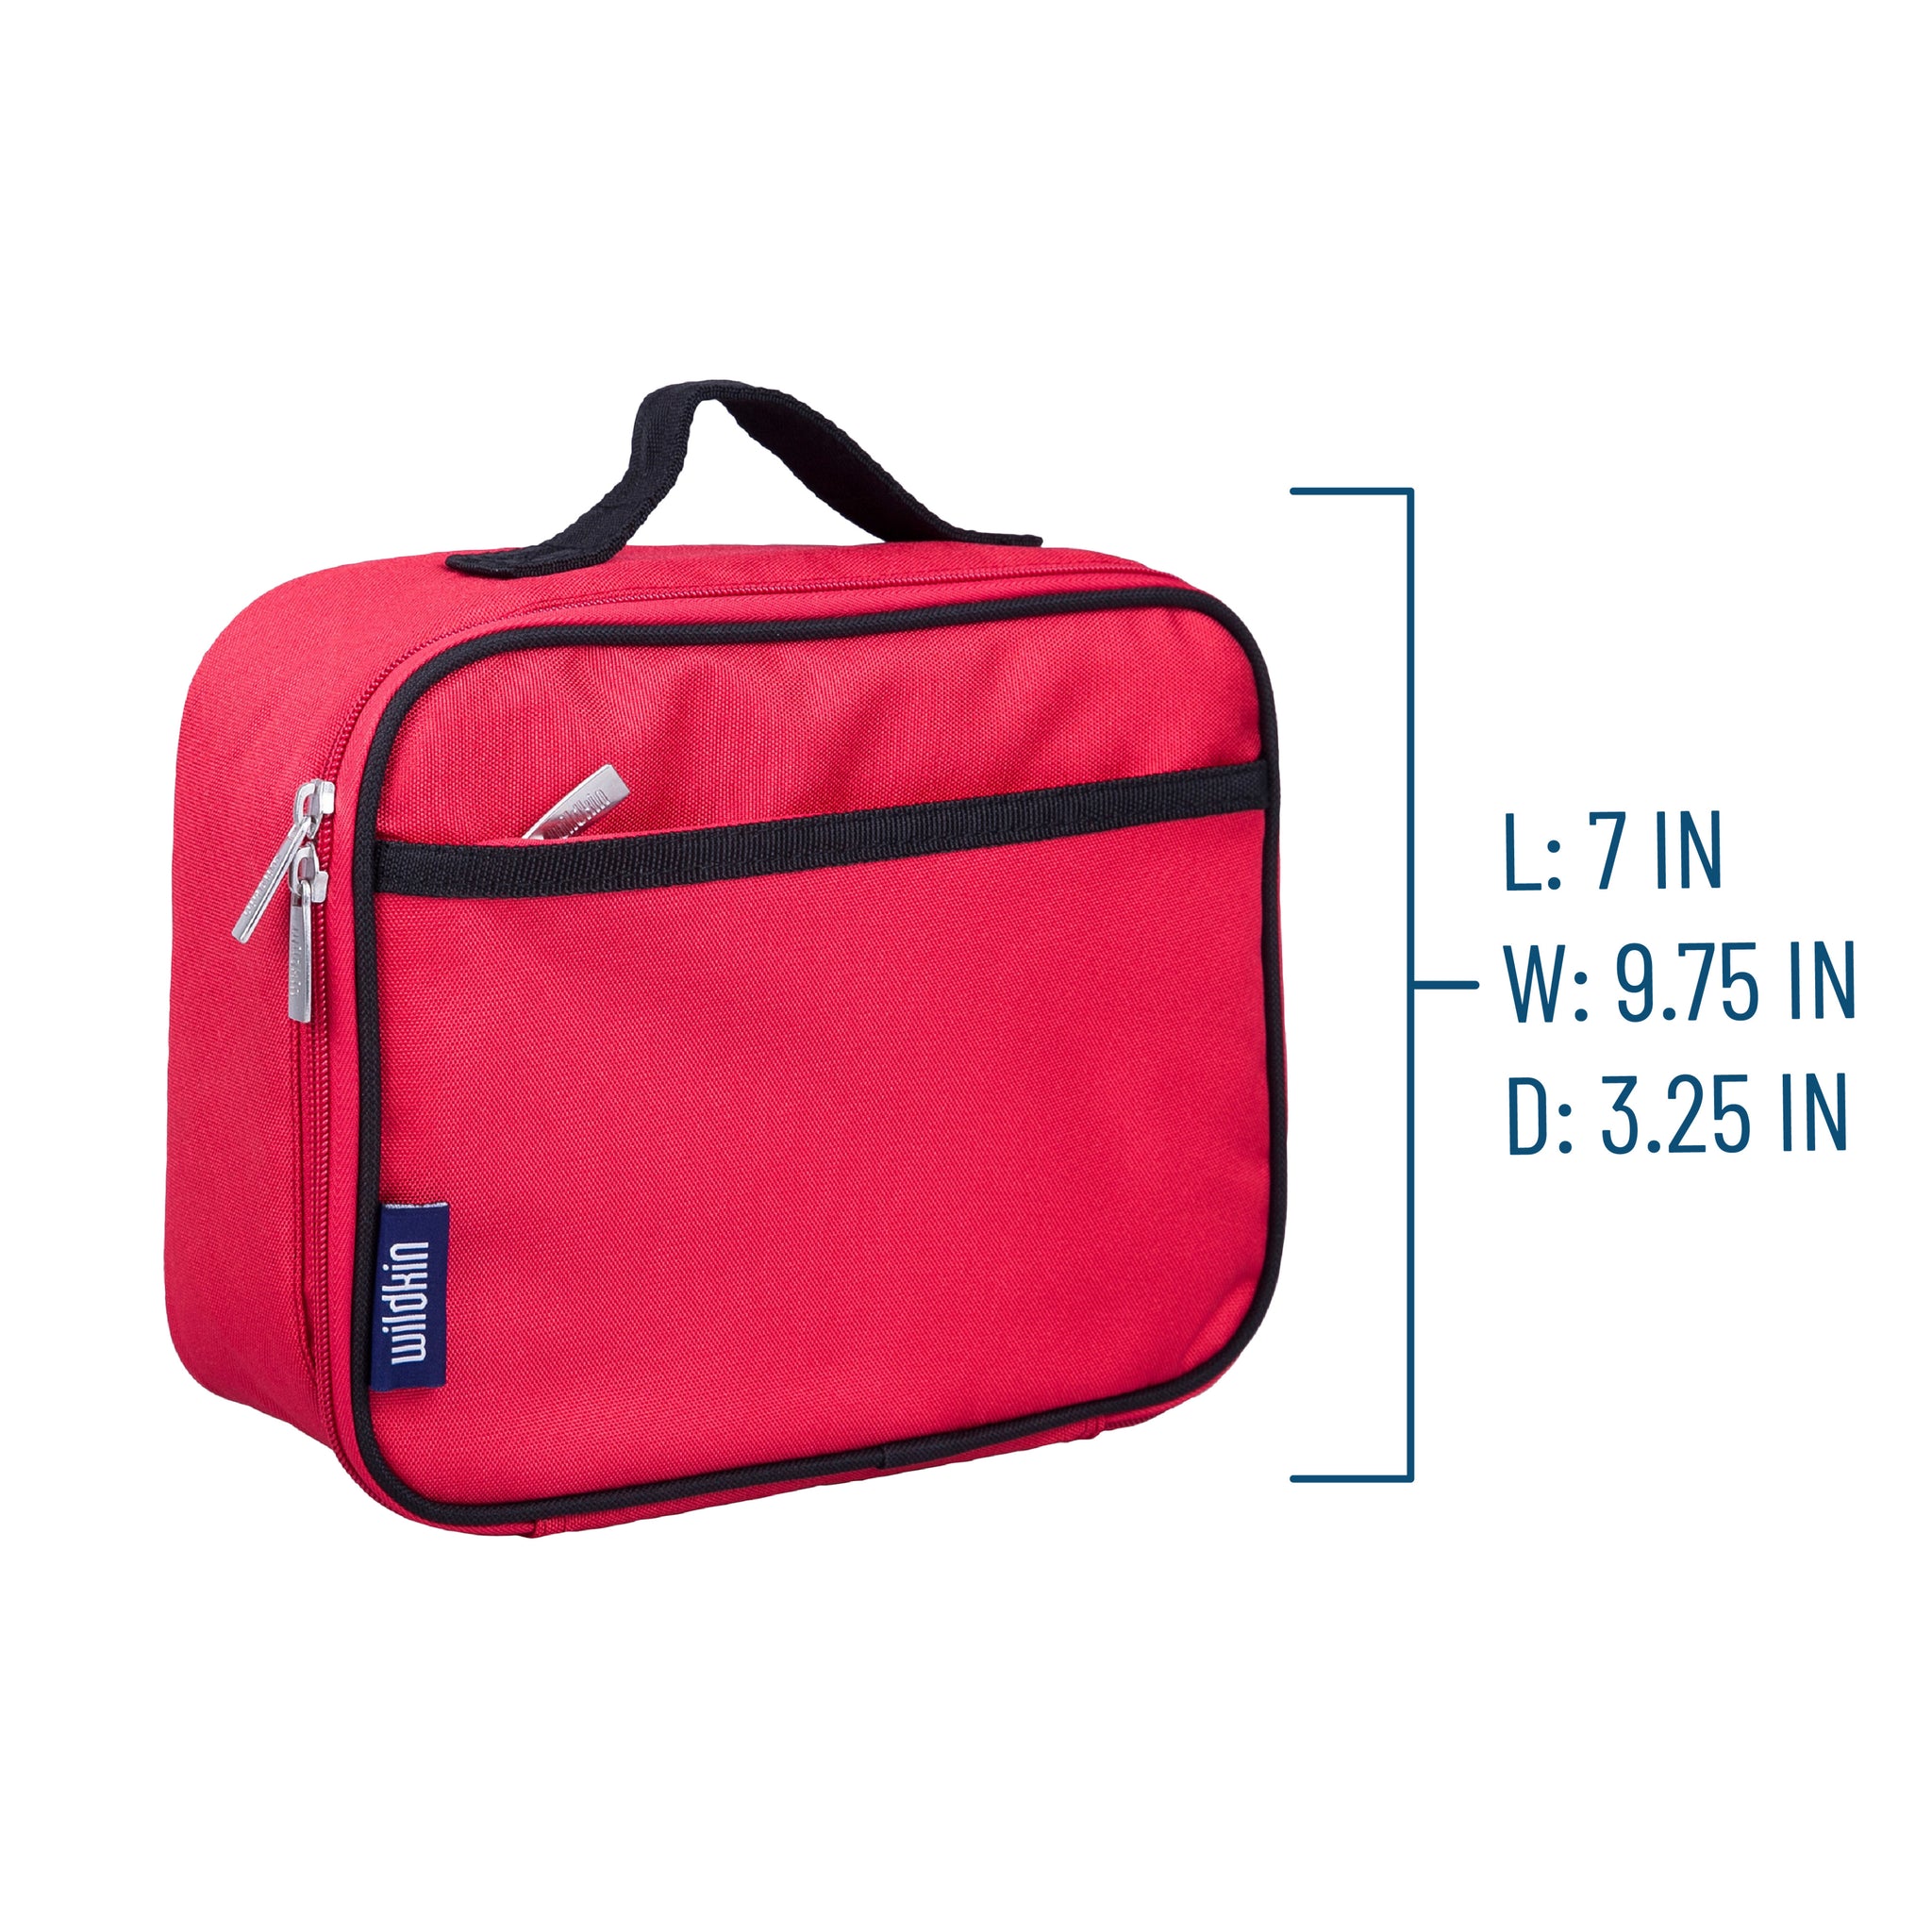 Wildkin Cardinal Red Double Decker Lunch Bag